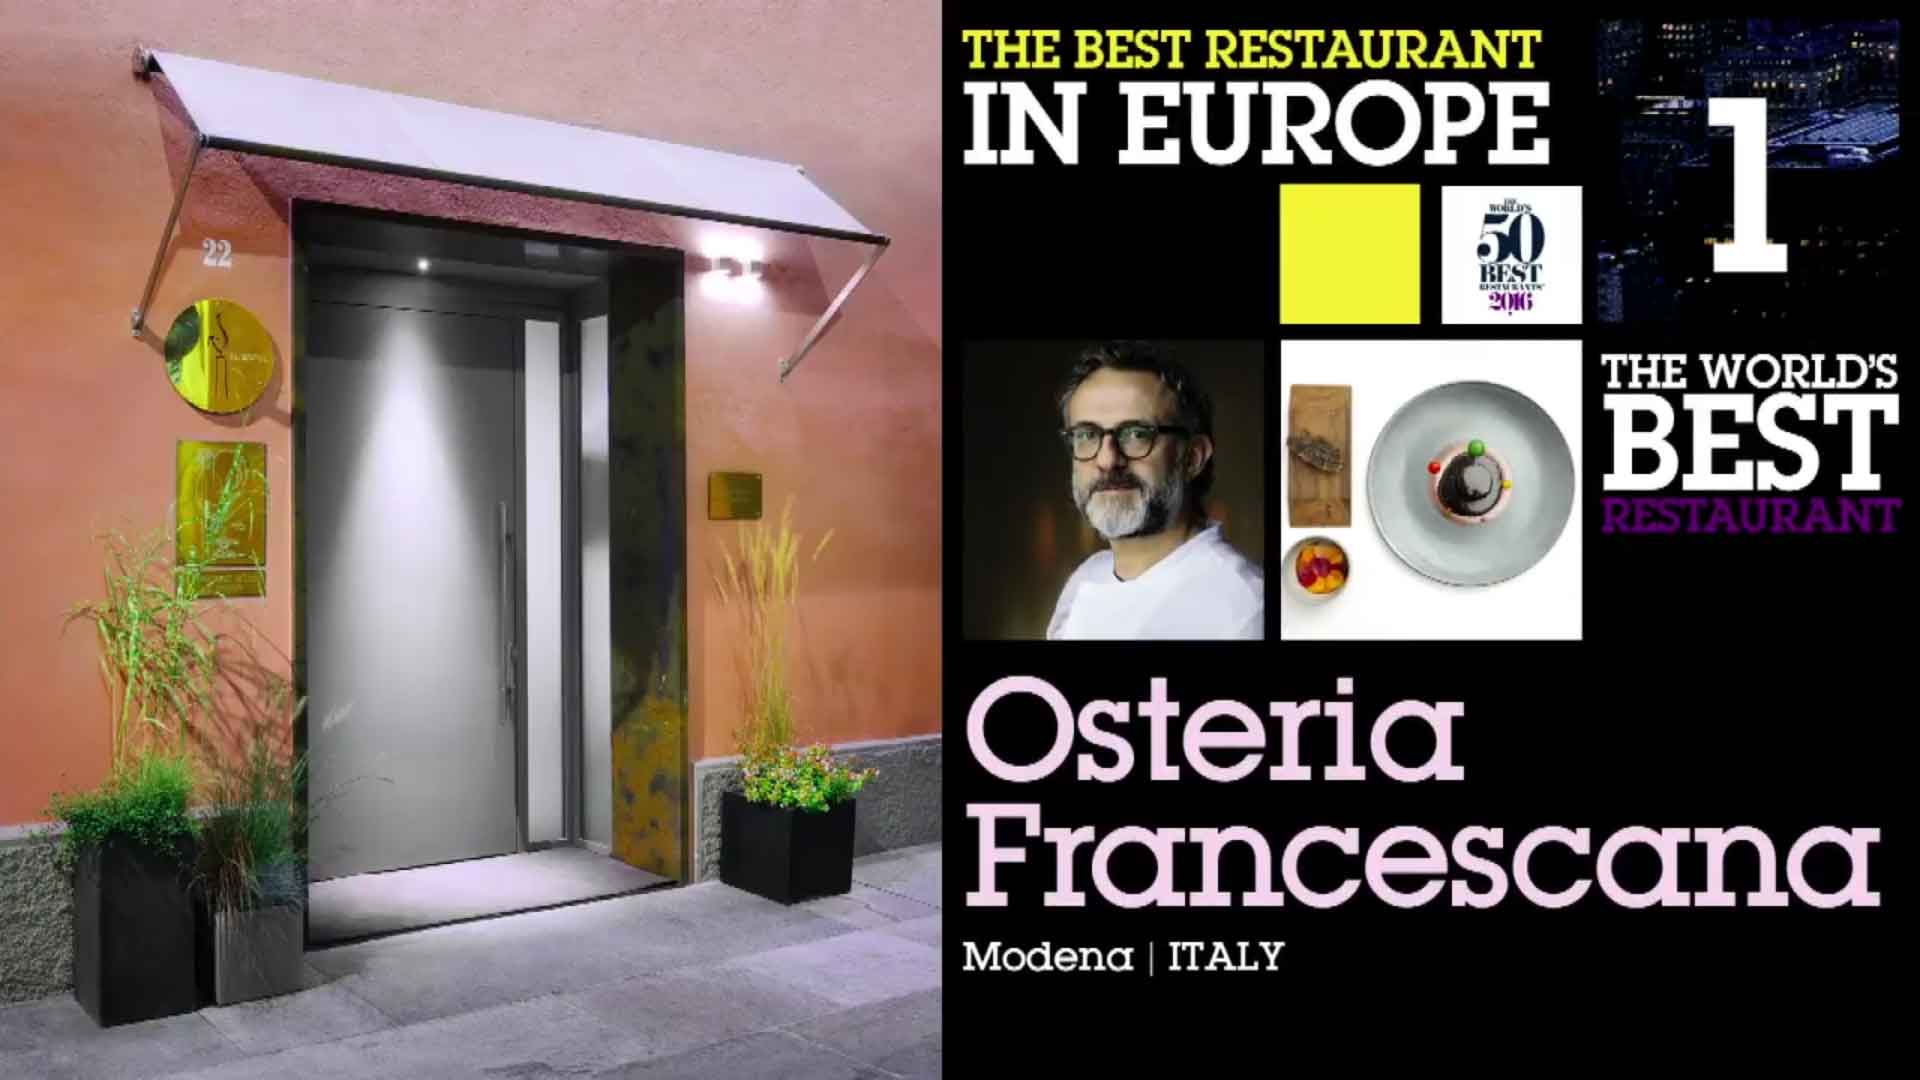 50 Best Restaurants 2016 classifica 1 Massimo Bottura